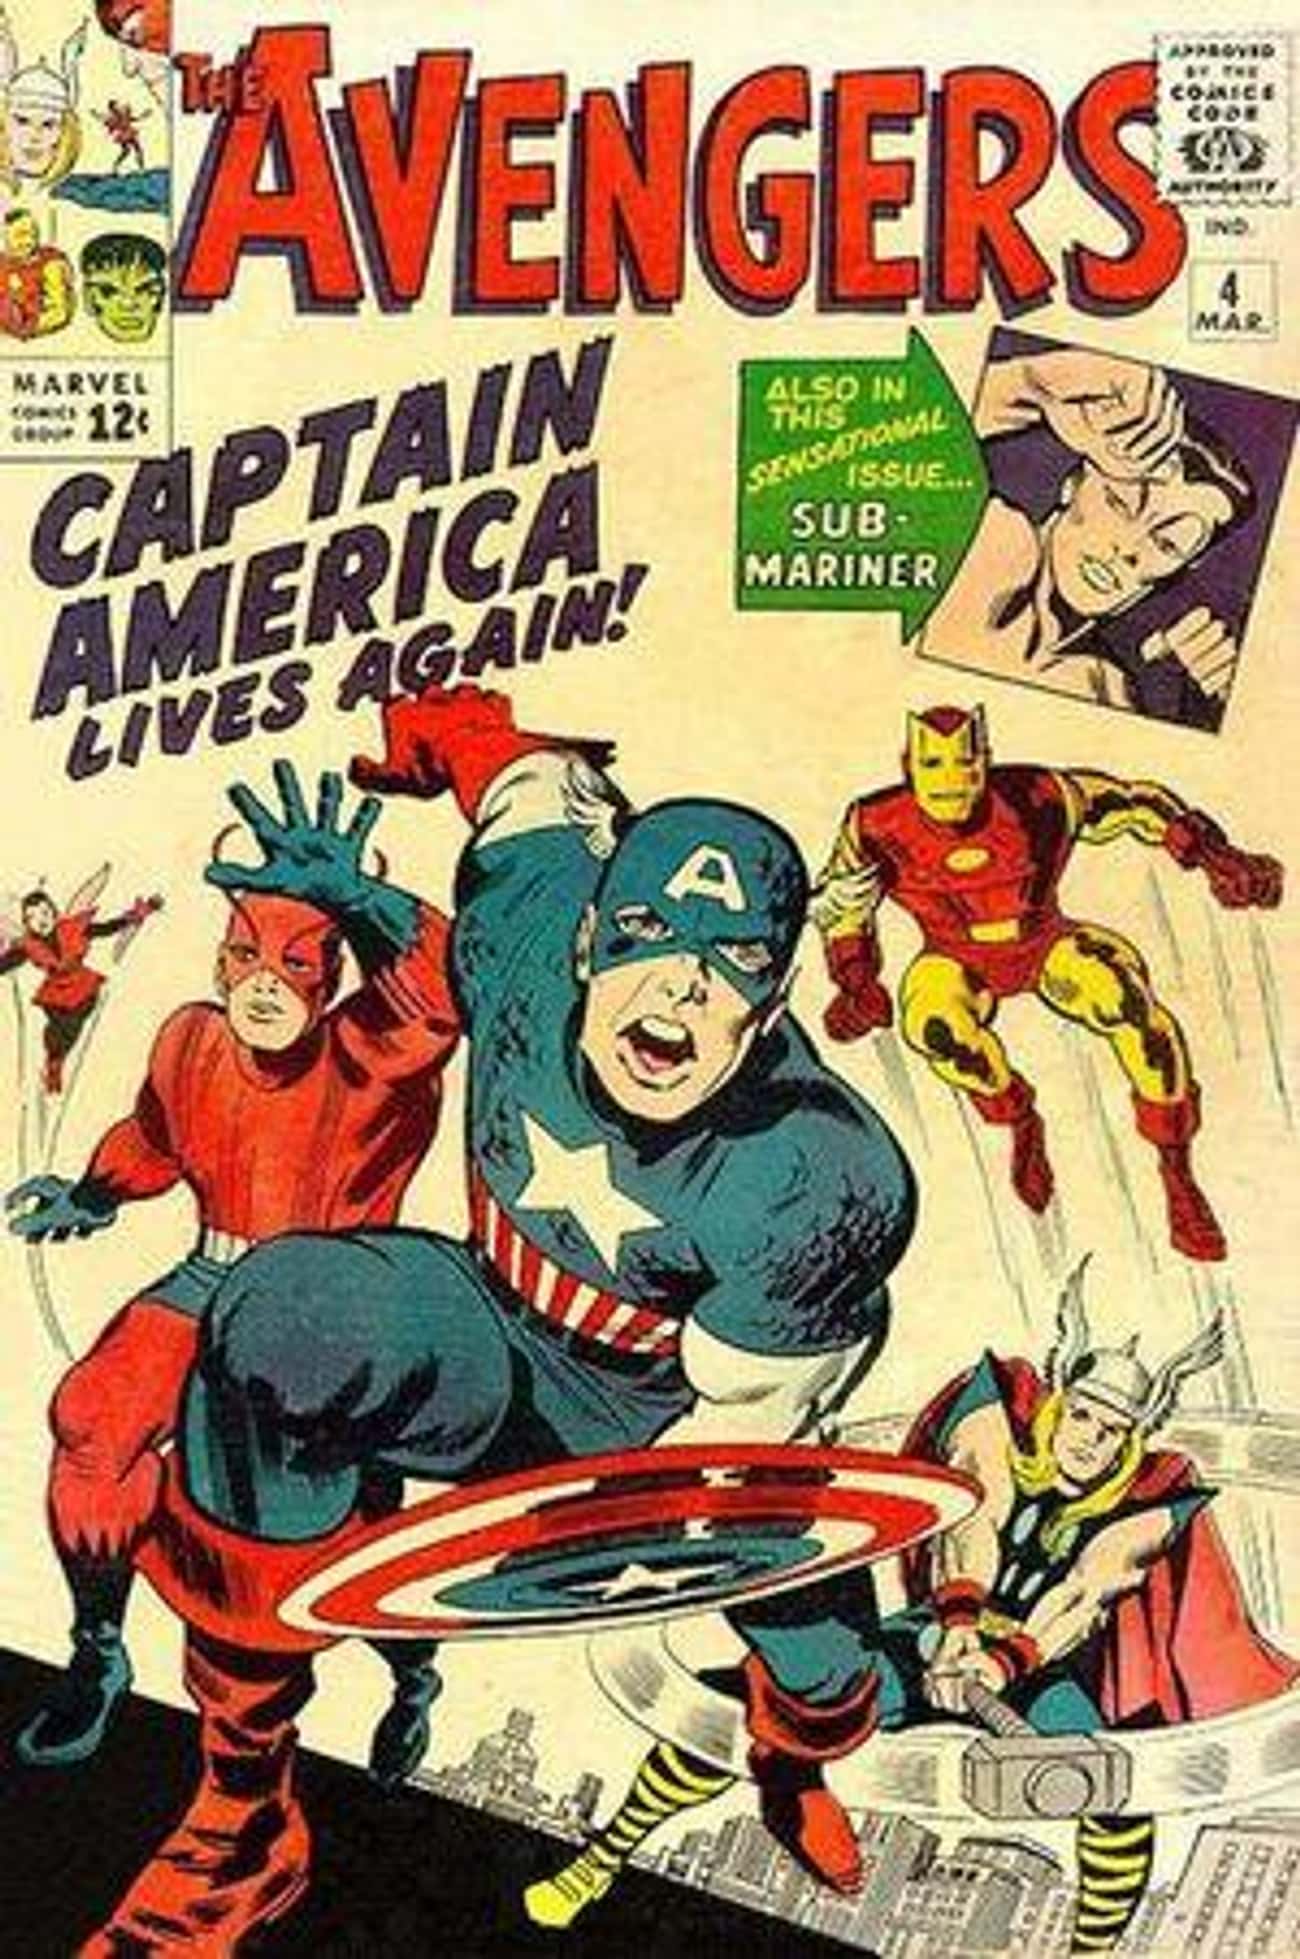 Captain America Joins... The Avengers!